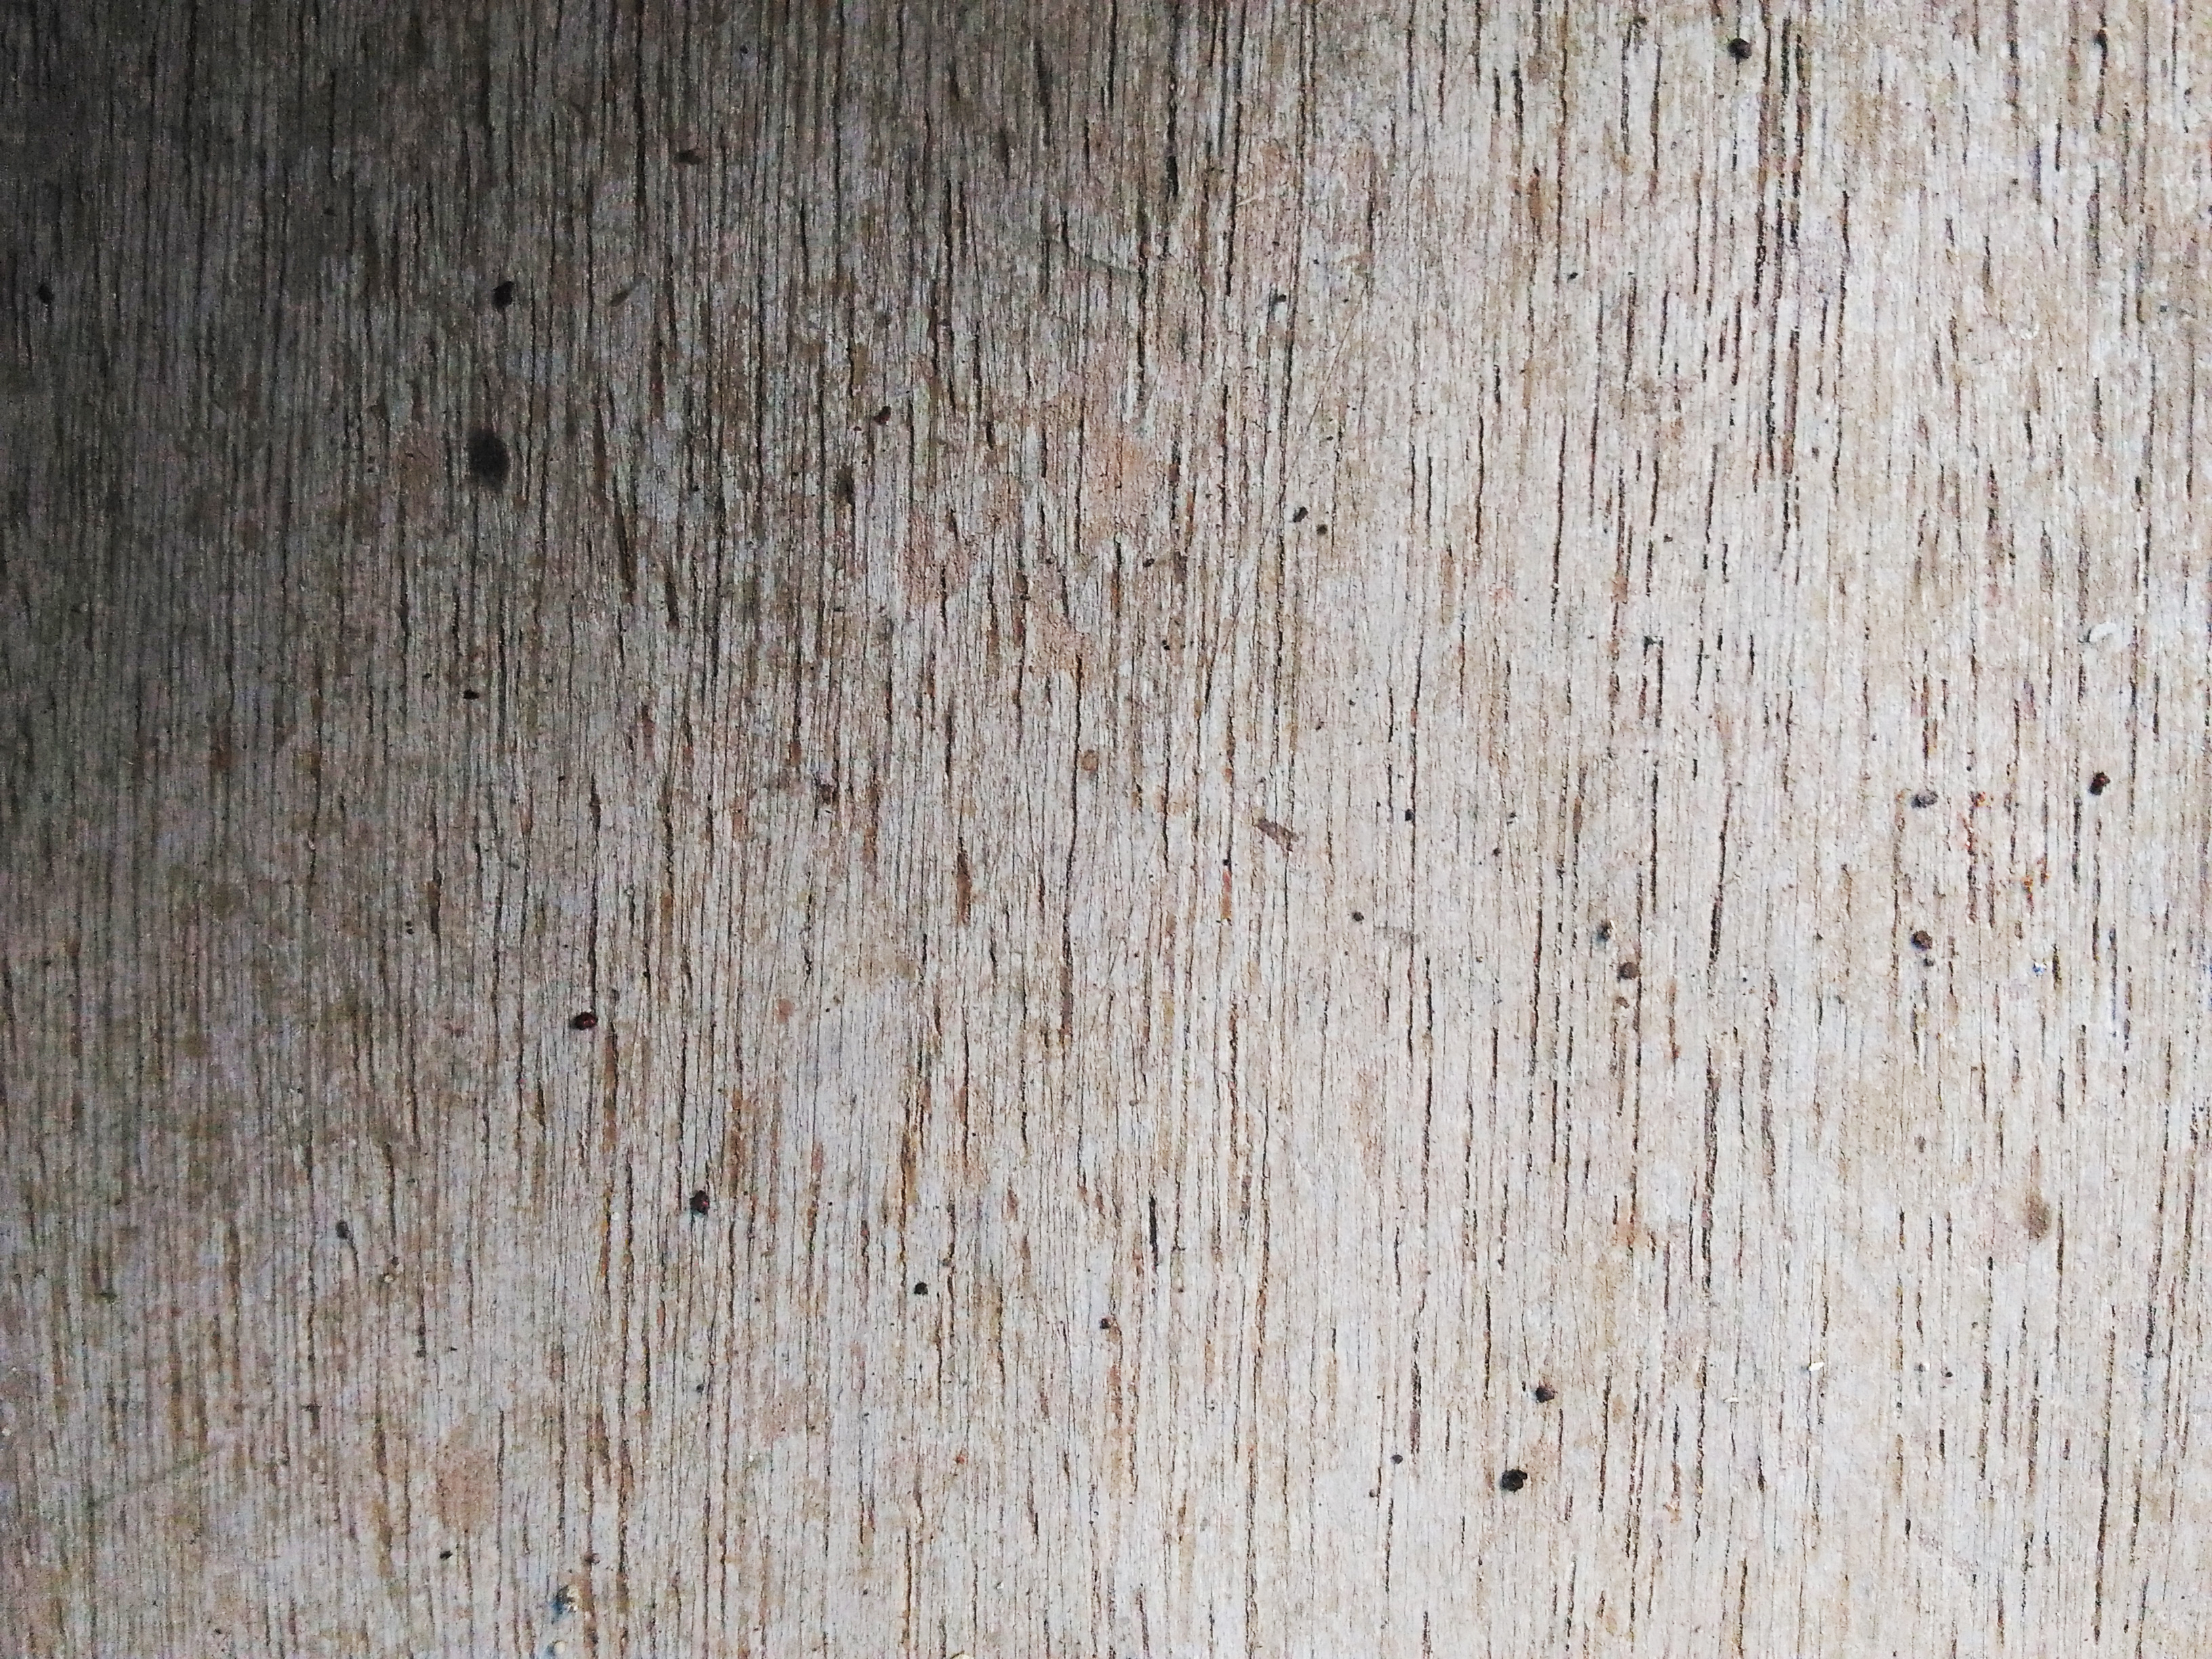 Fine wood texture photo